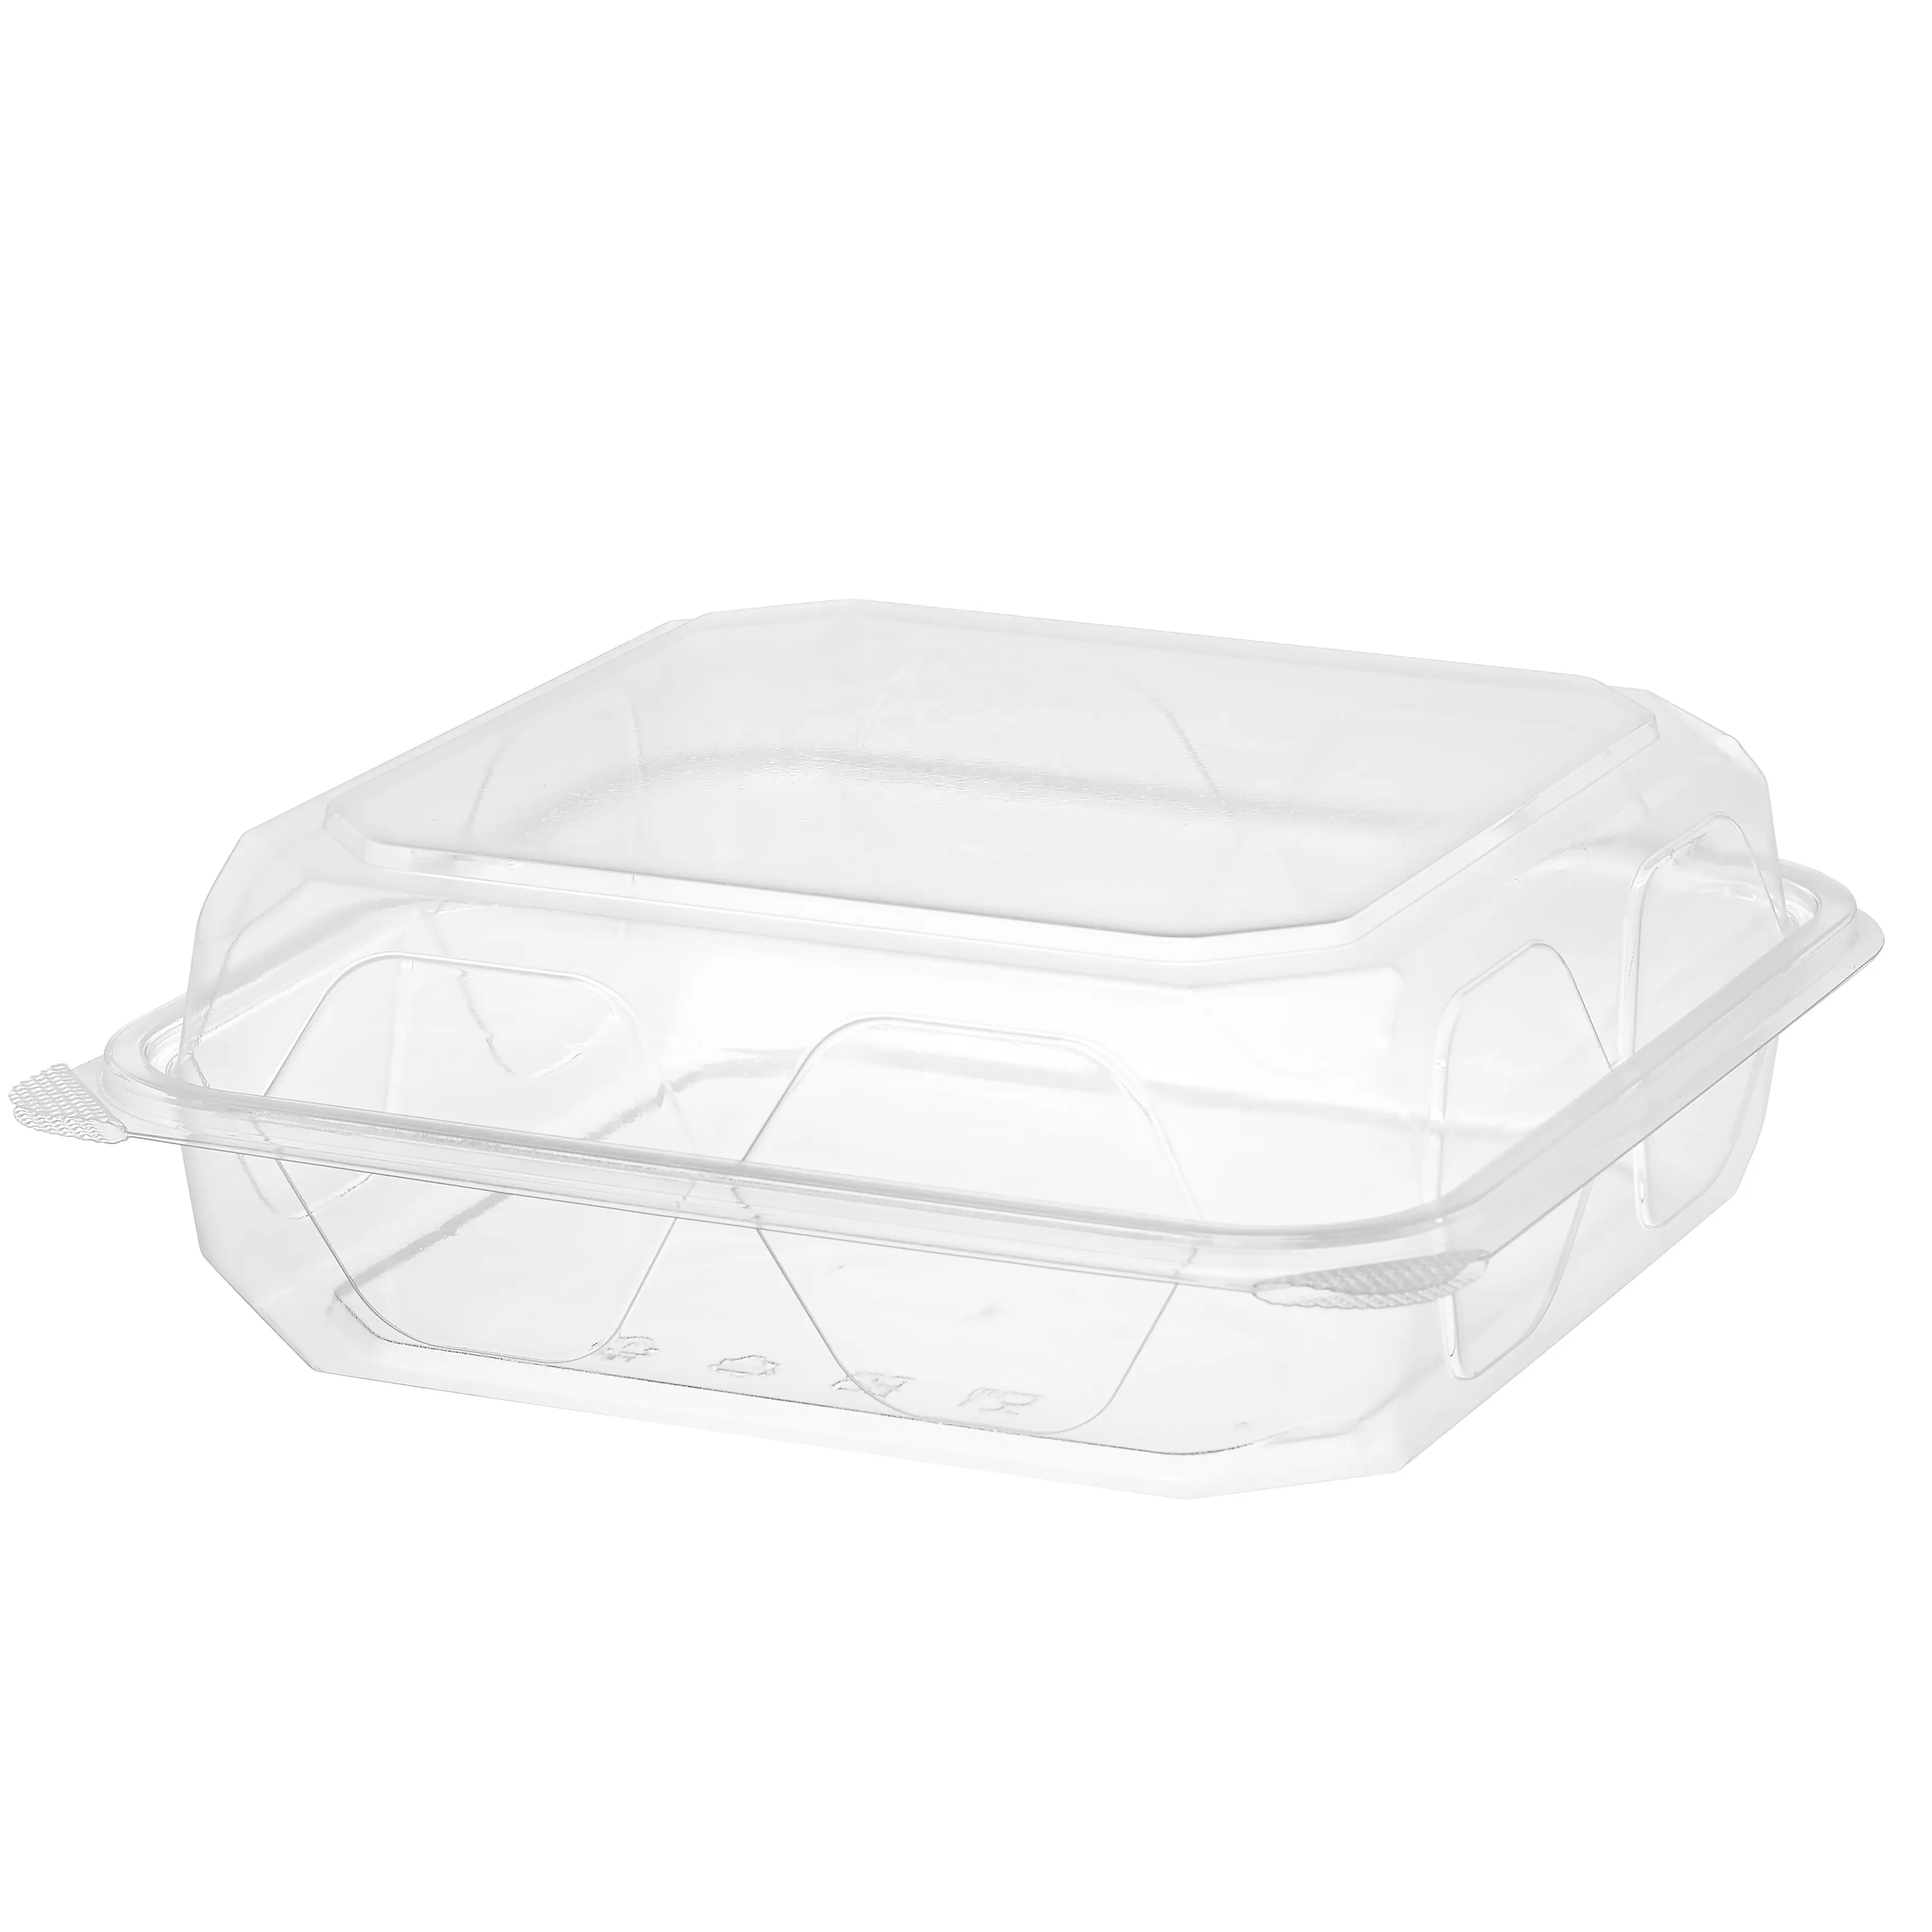 Recipientes de alimentos plásticos descartáveis, design concise transparente dobradiça bandeja